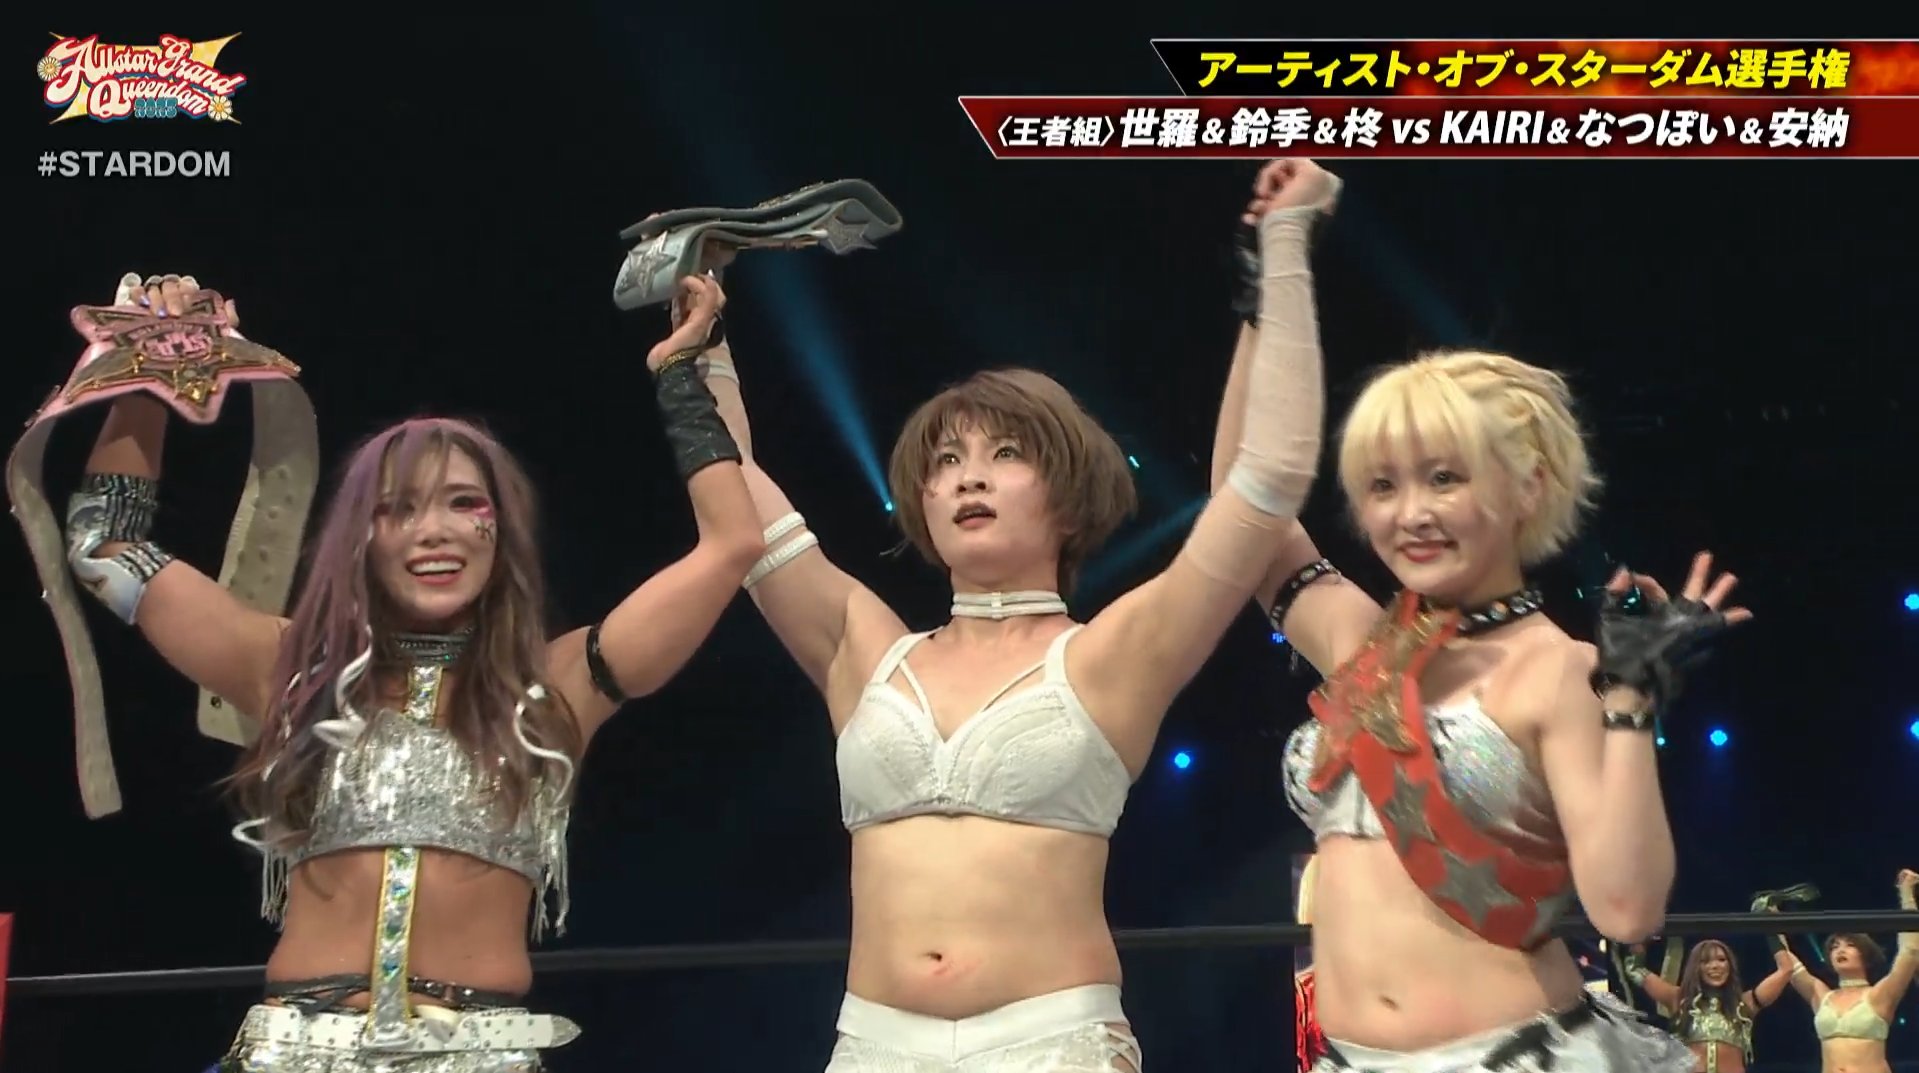 KAIRI, Natsupoi e Saori Anou conquistam o Artist of STARDOM Championship